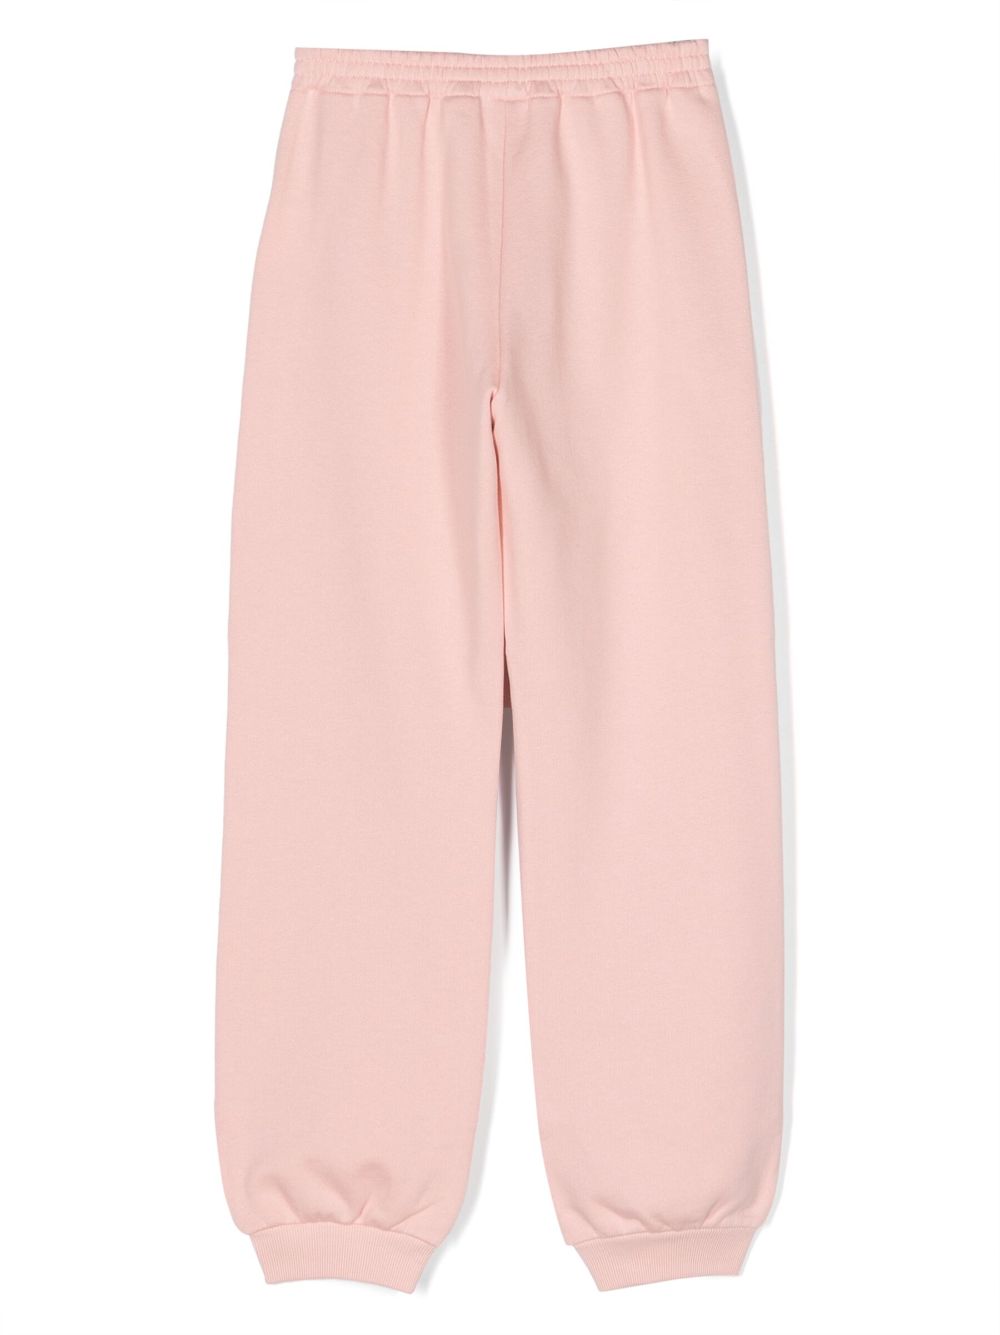 Pantalone sportivo rosa per bambina